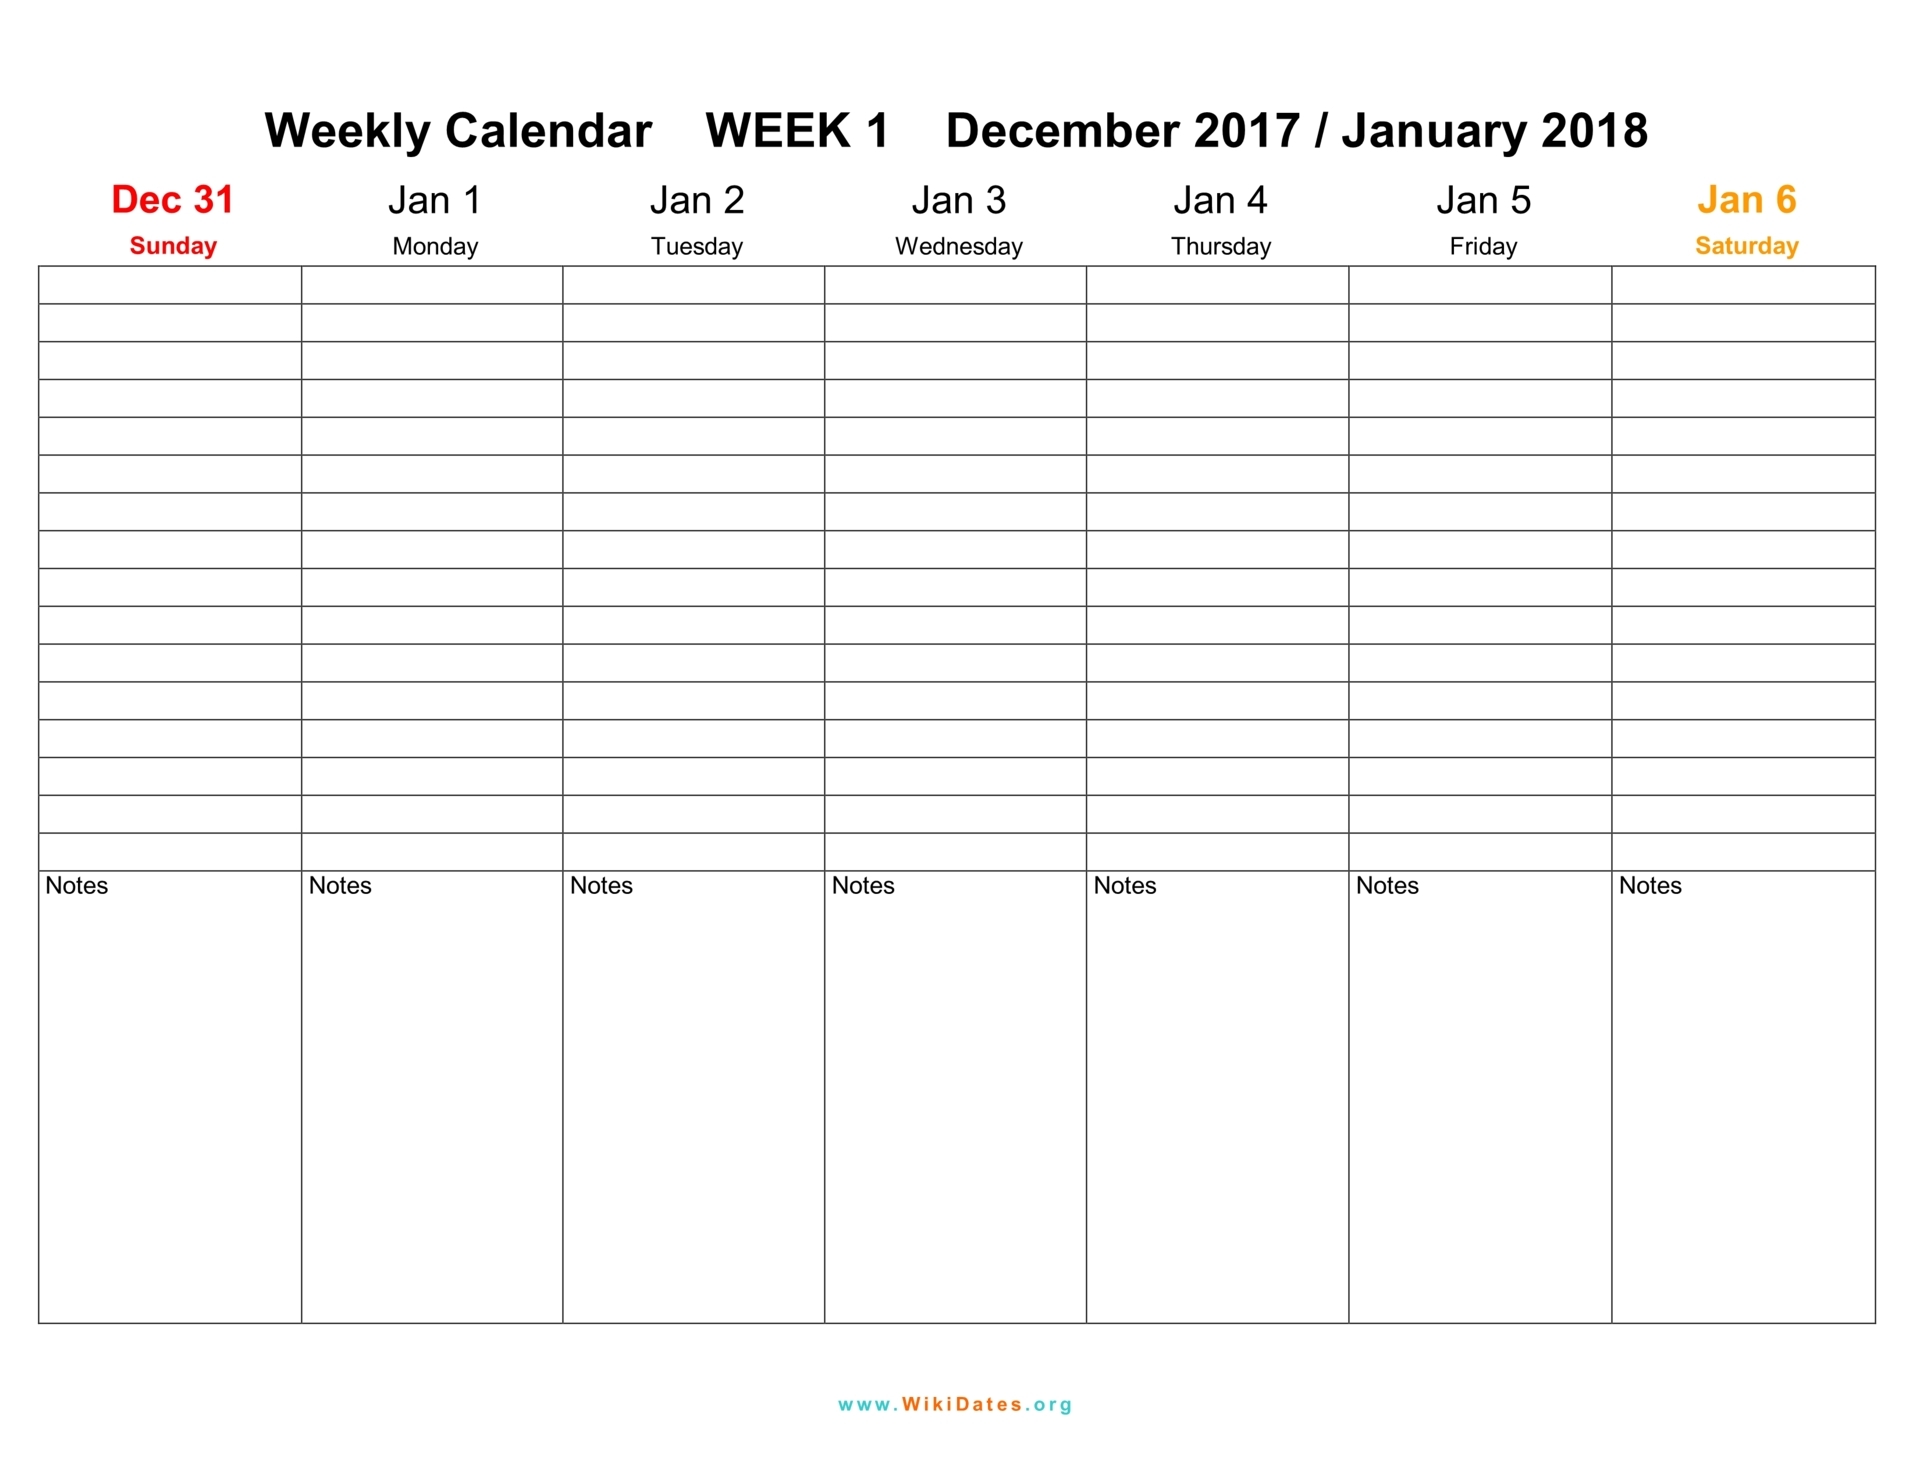 Weekly Calendar - Download weekly calendar 2017 and 2018| WikiDates.org